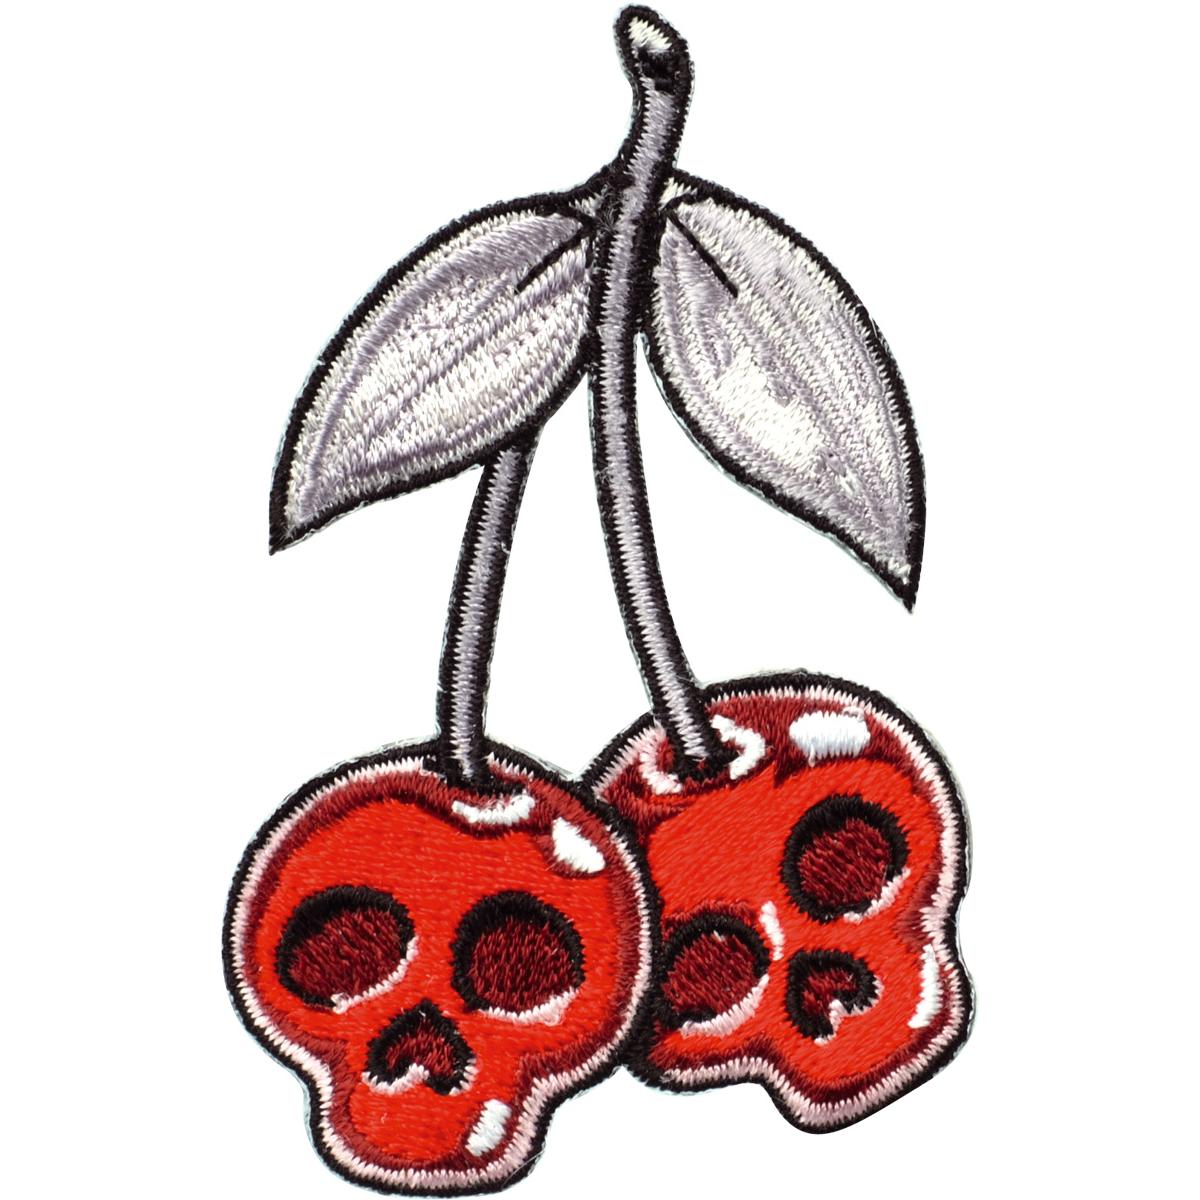 Amazing Cherry Skulls Tattoos Design